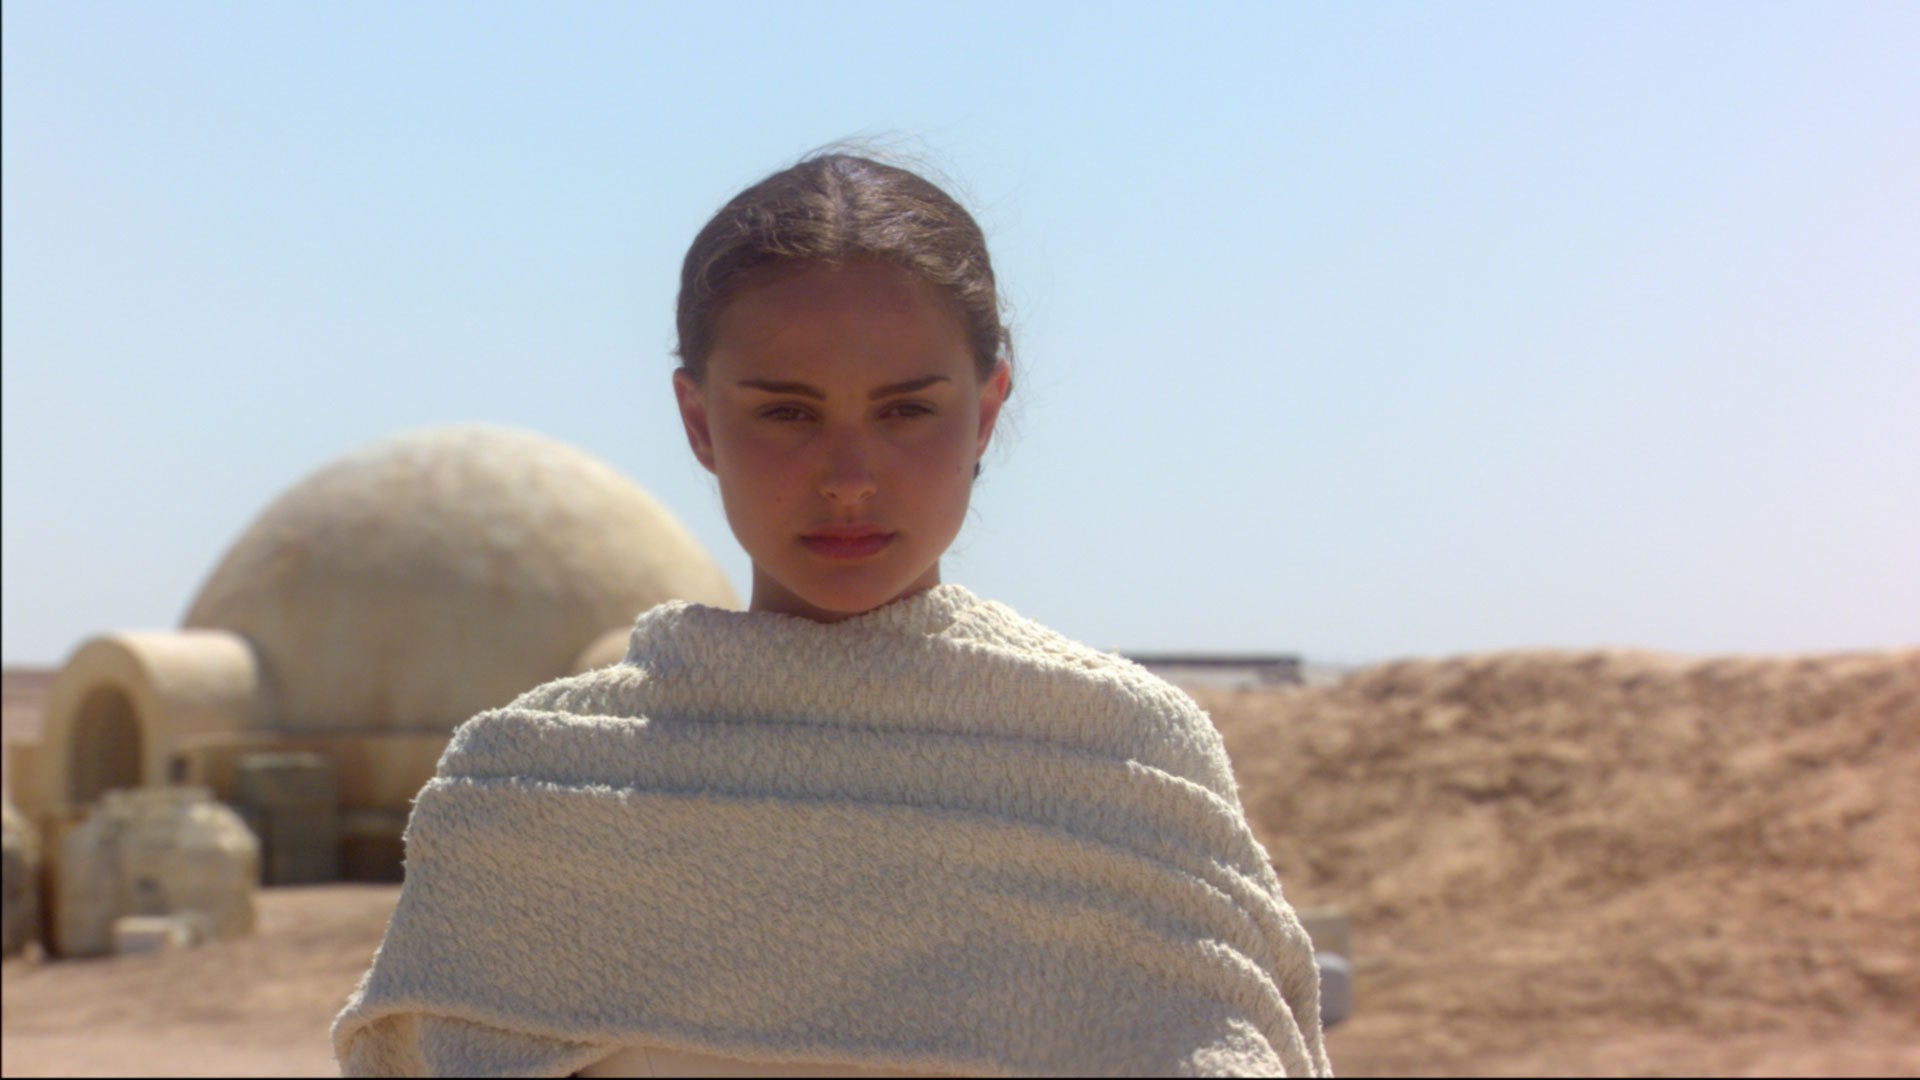 Movies Star Wars Star Wars Episode Ii The Attack Of The Clones Natalie Portman Padme Amidala 1920x1080